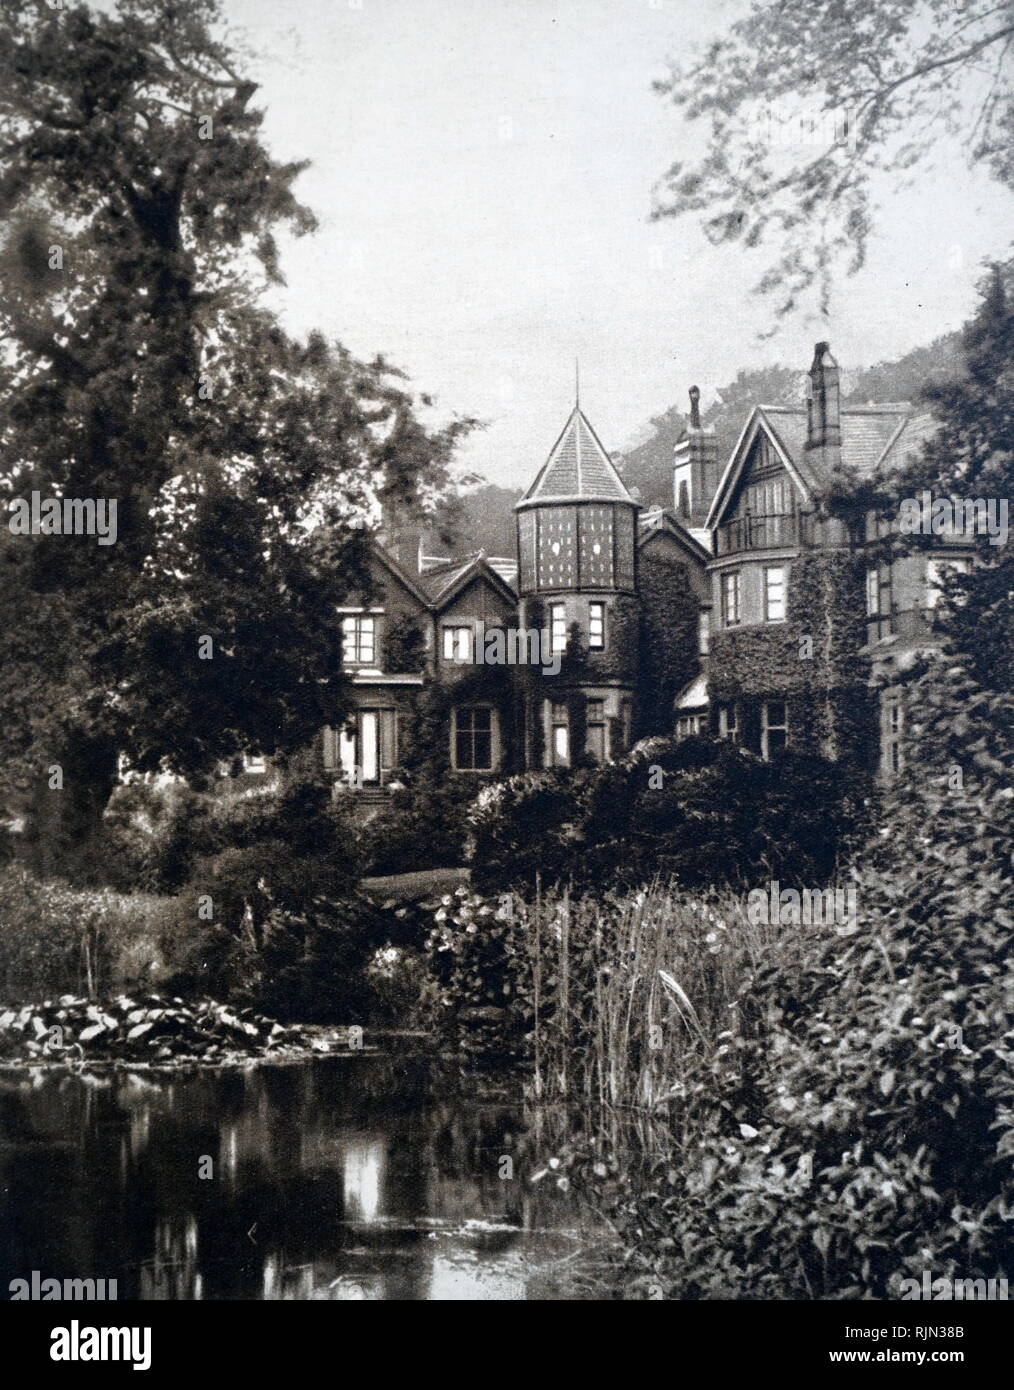 York Cottage, Sandringham where Prince Albert (later King George VI) was born on 14 December 1895 Stock Photo